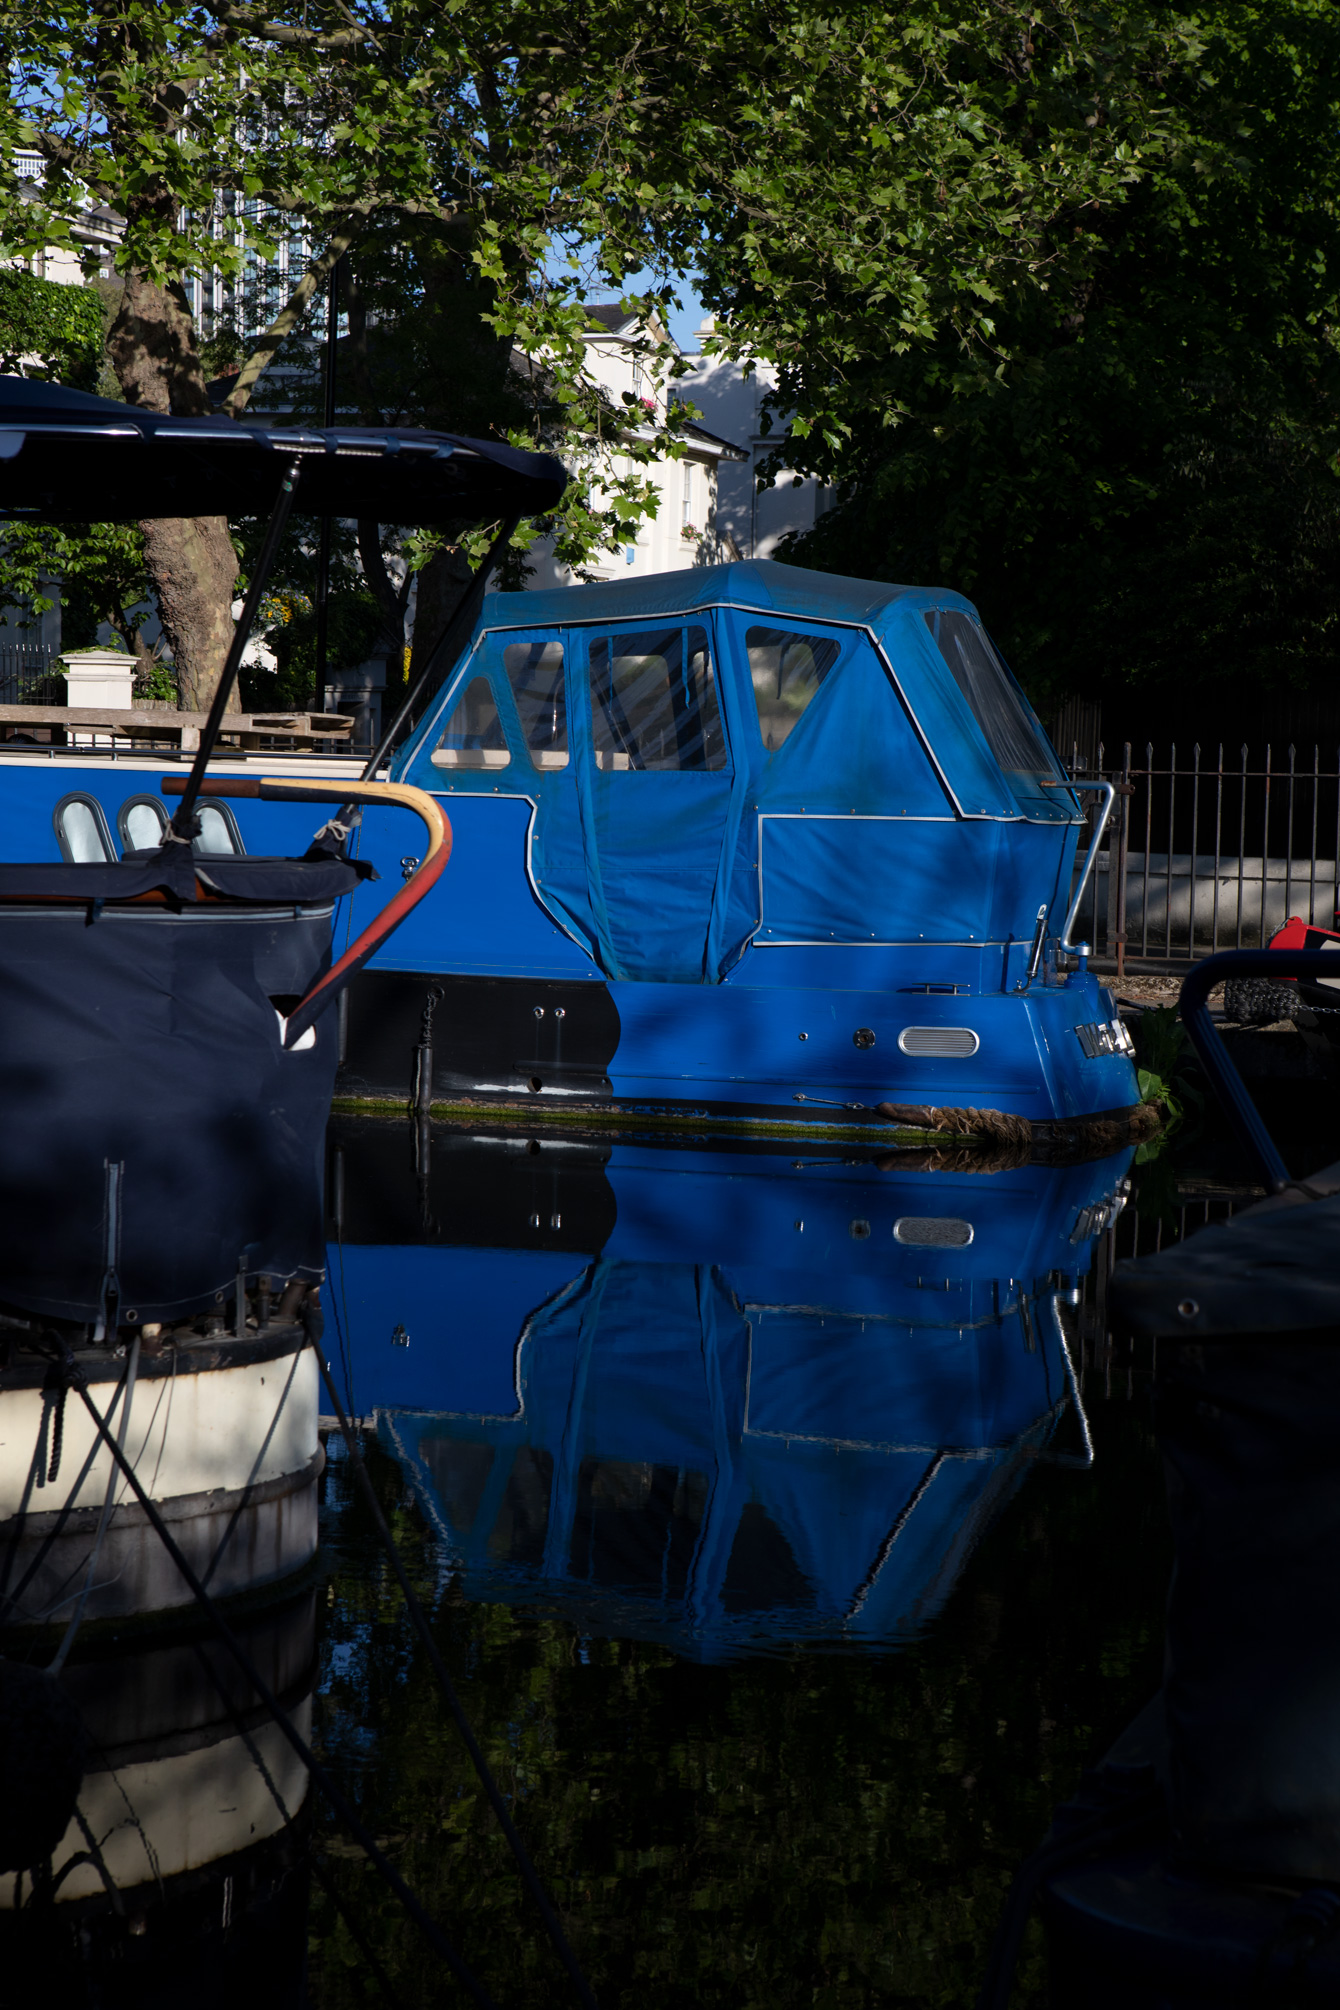 little-venice-london-maida-vale-canal-boat